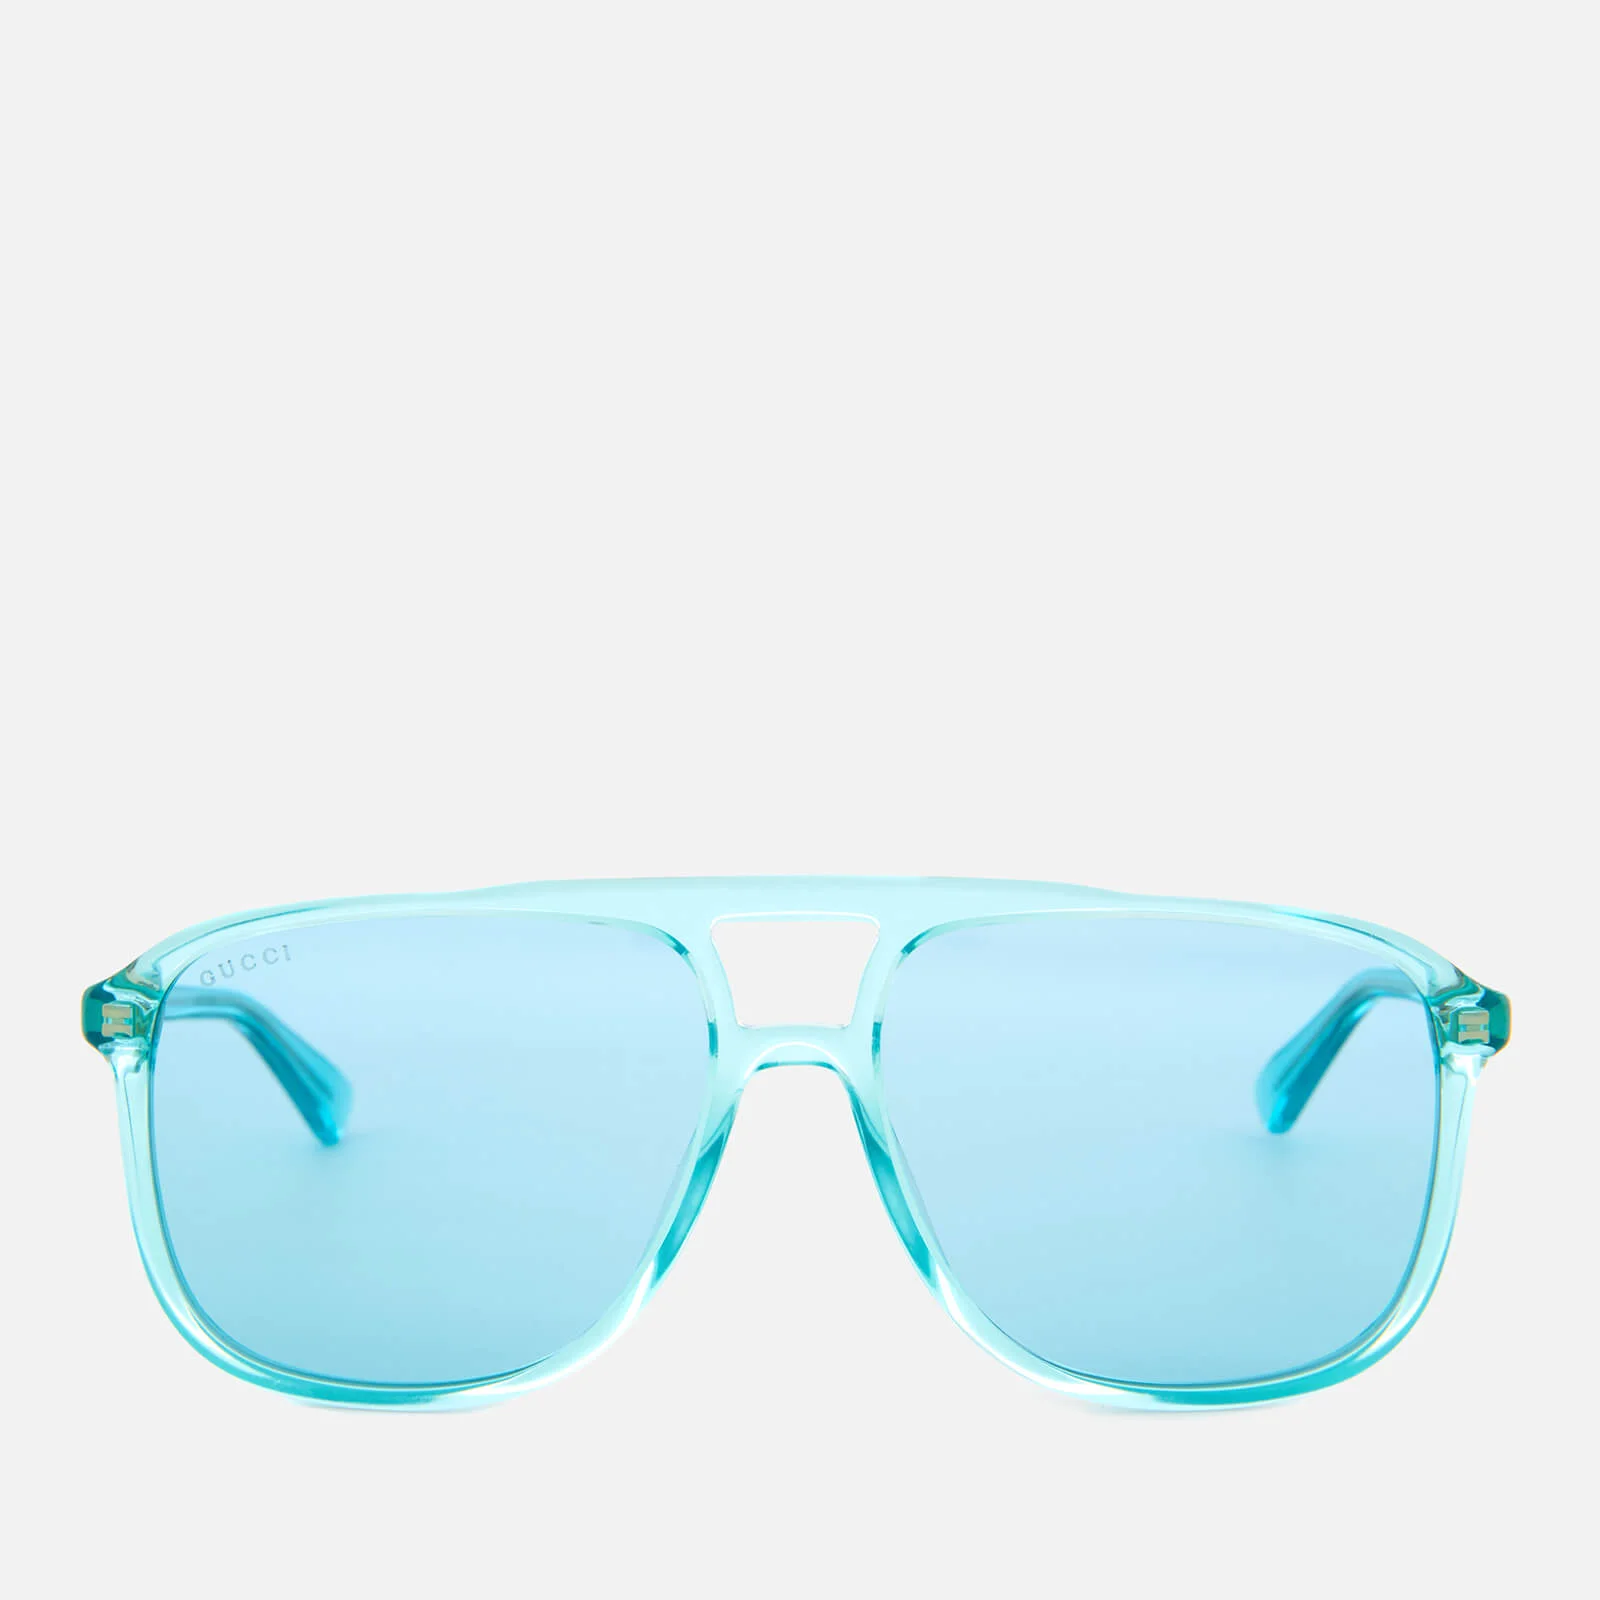 Gucci Men's Acetate Blue Frame Sunglasses - Light Blue Image 1